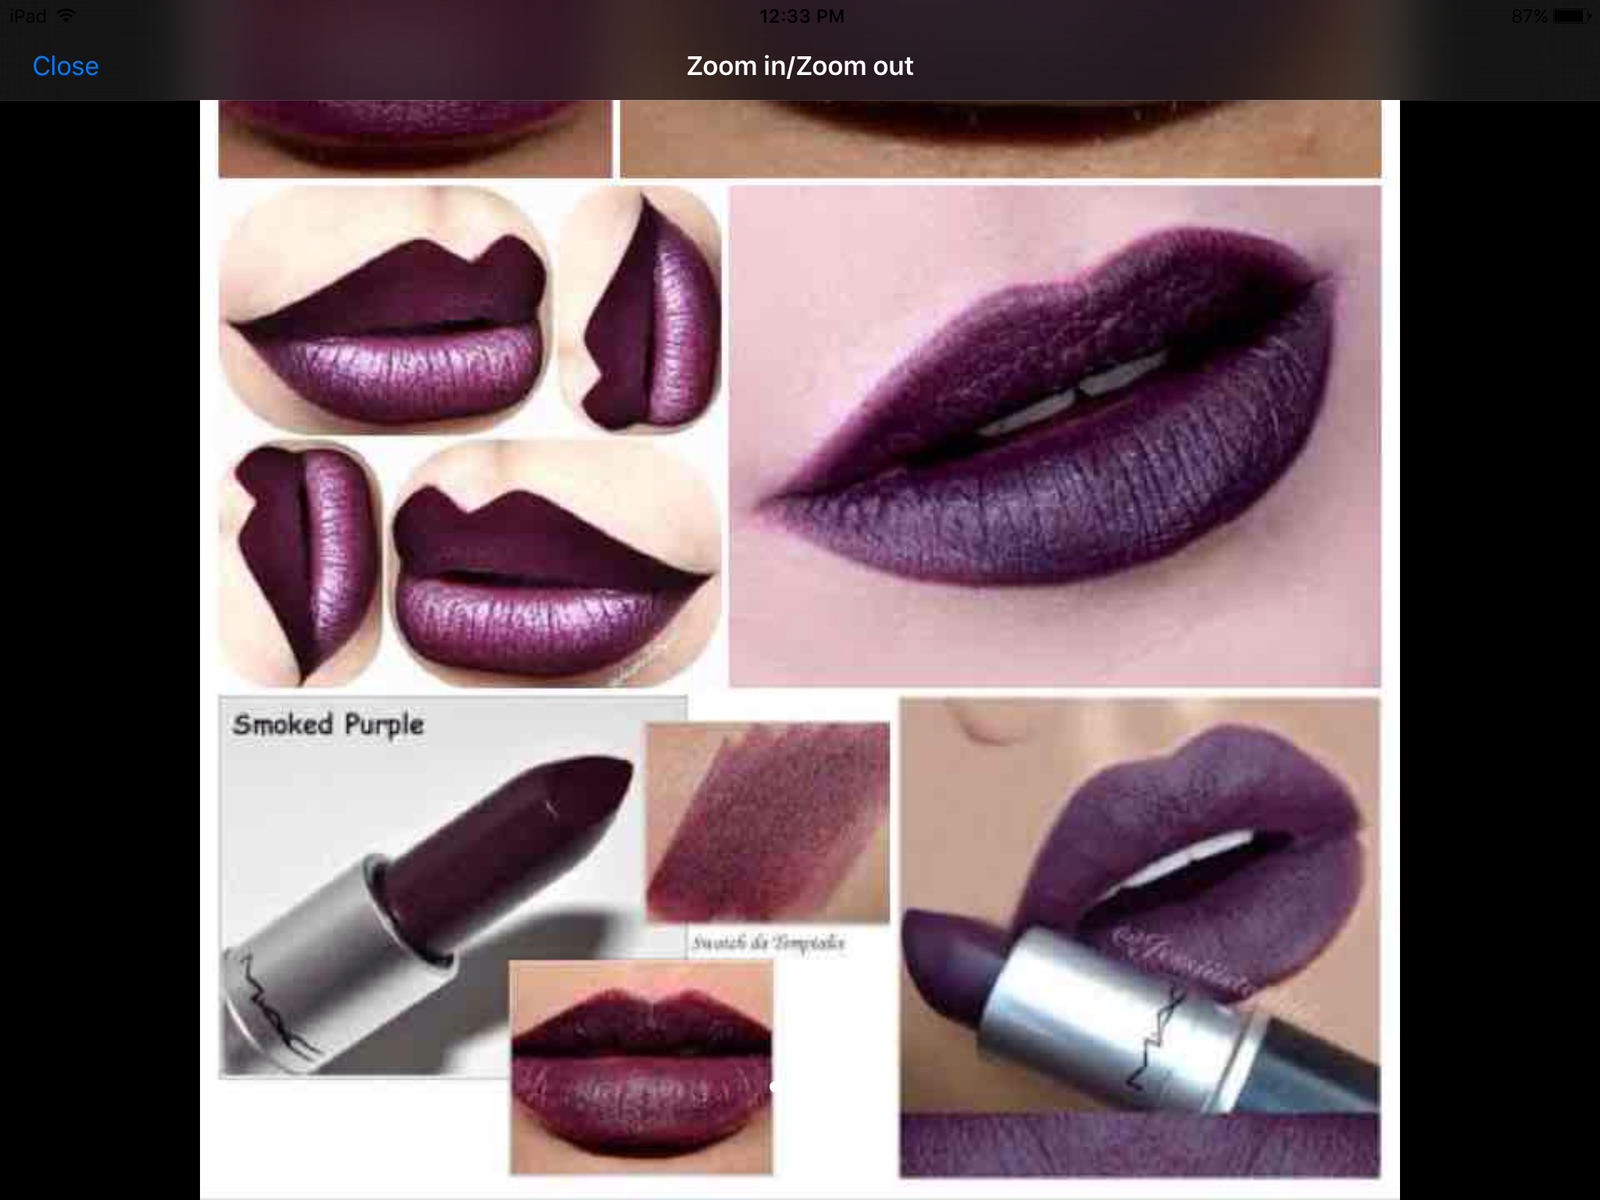 Authentic mac matte smoked purple lipstick,full size & new in box. 